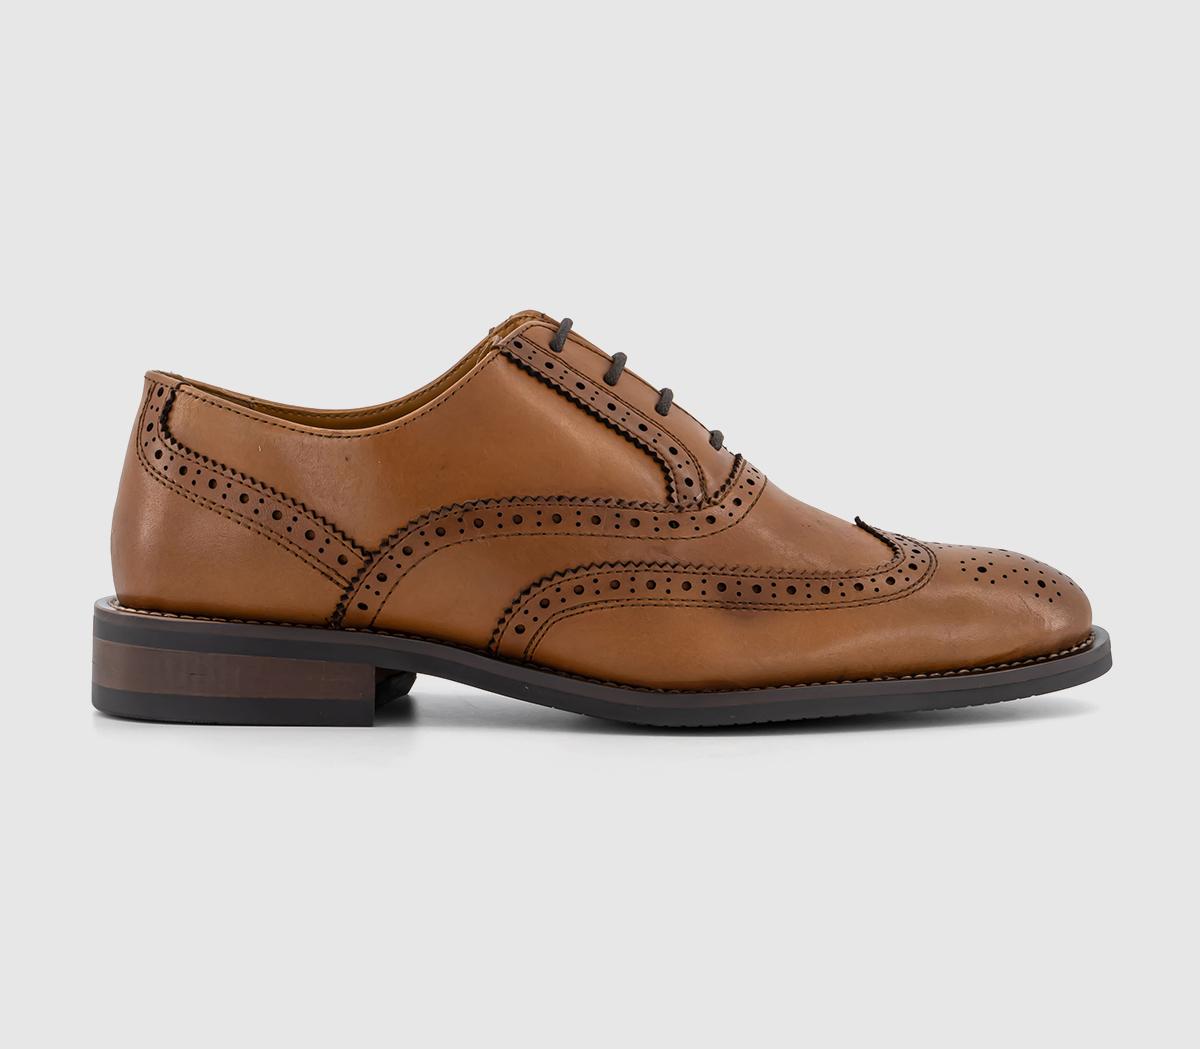 OFFICEMariner Wingcap Brogue ShoesTan Leather